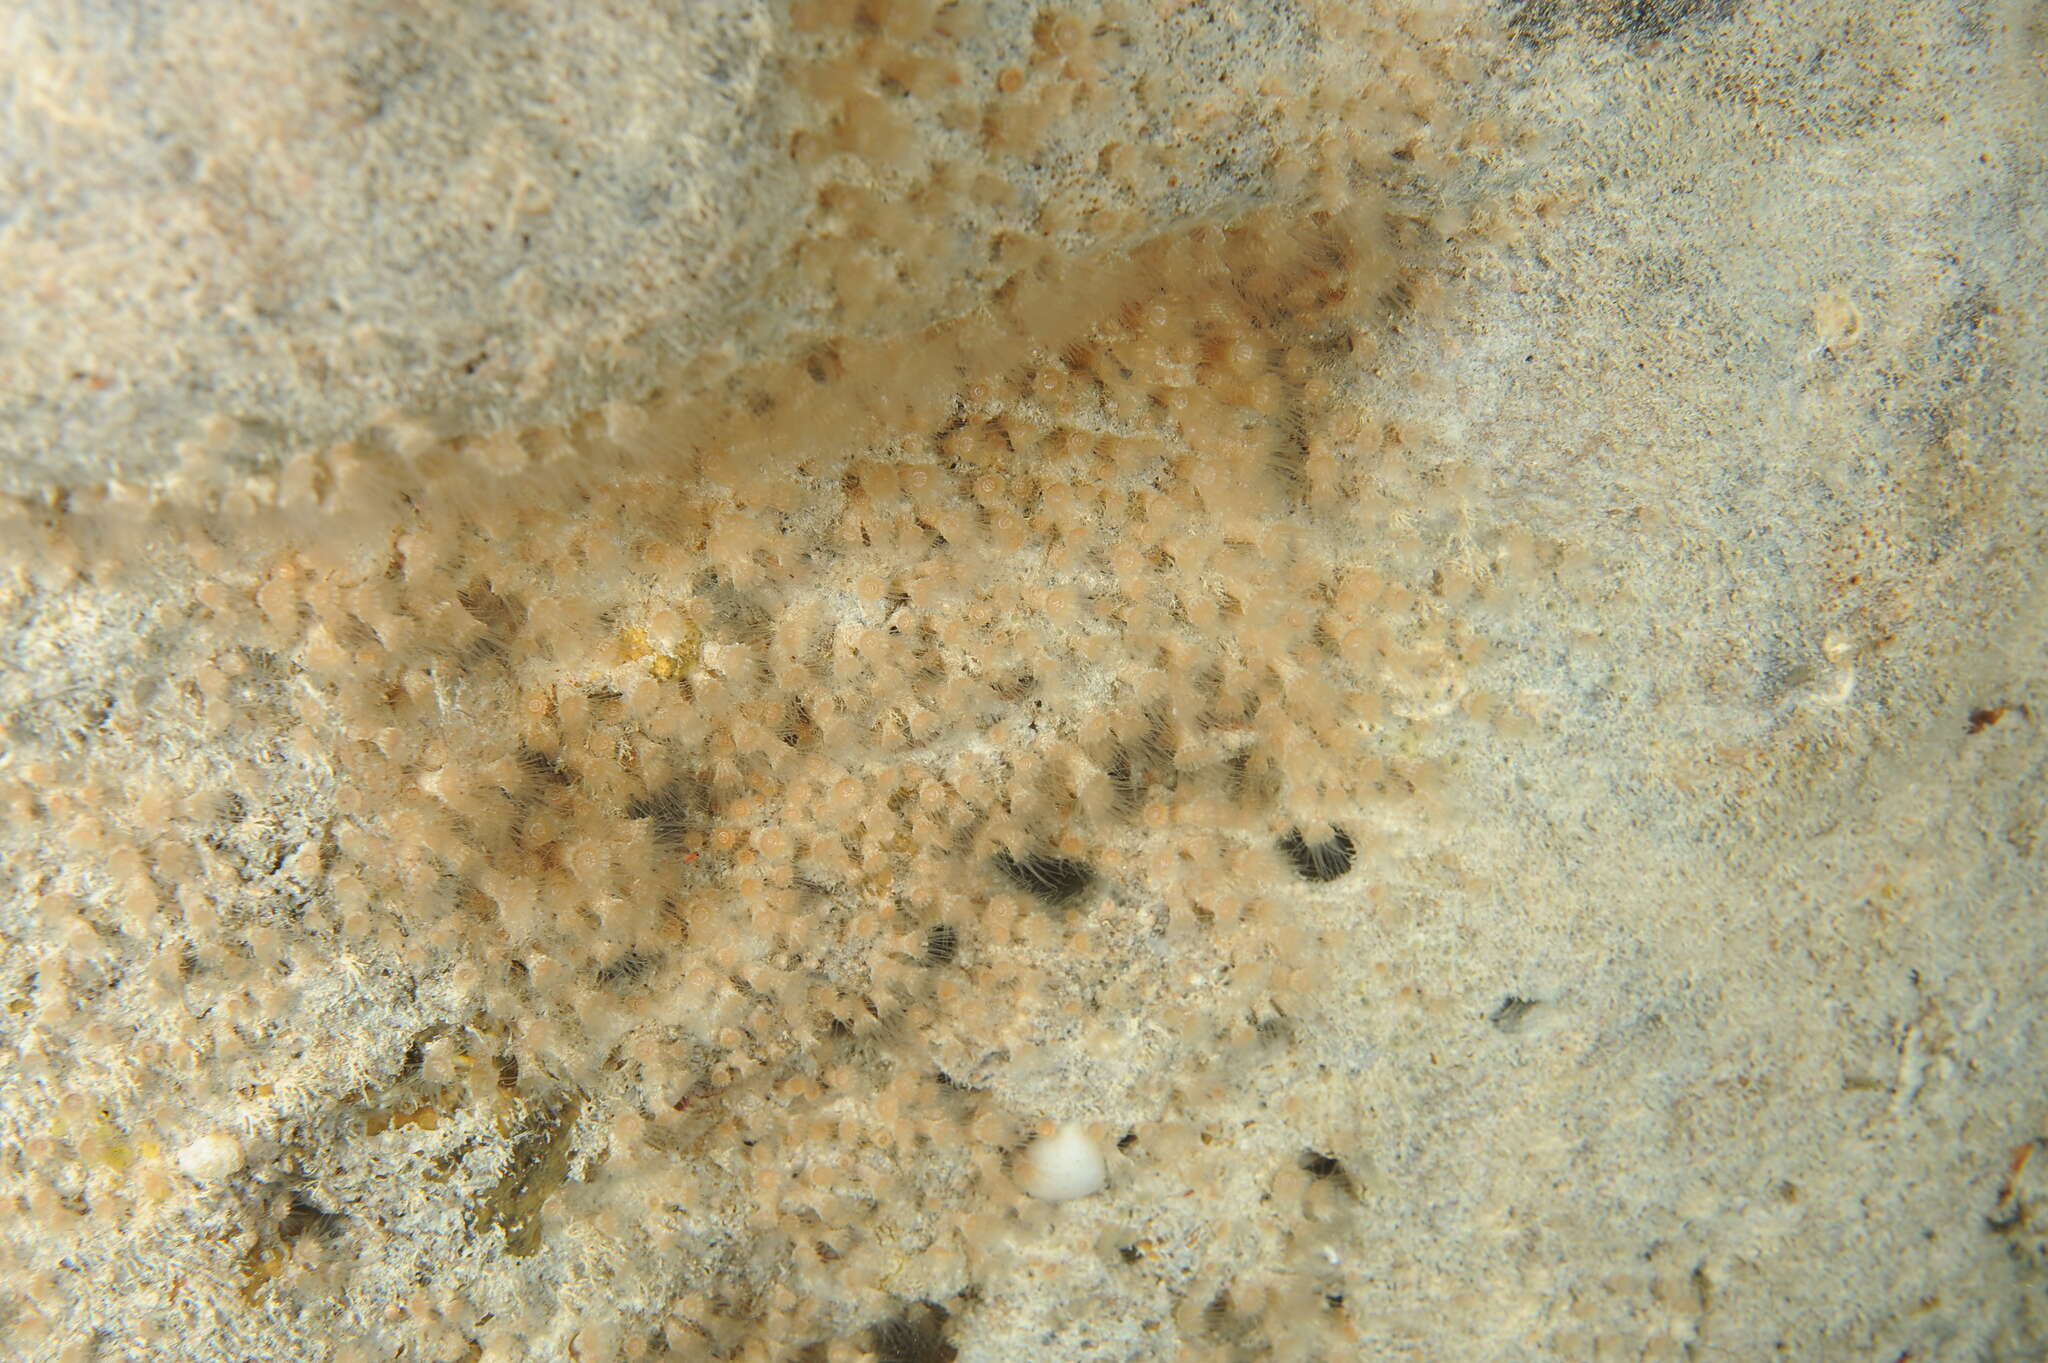 Image of gray encrusting anemone